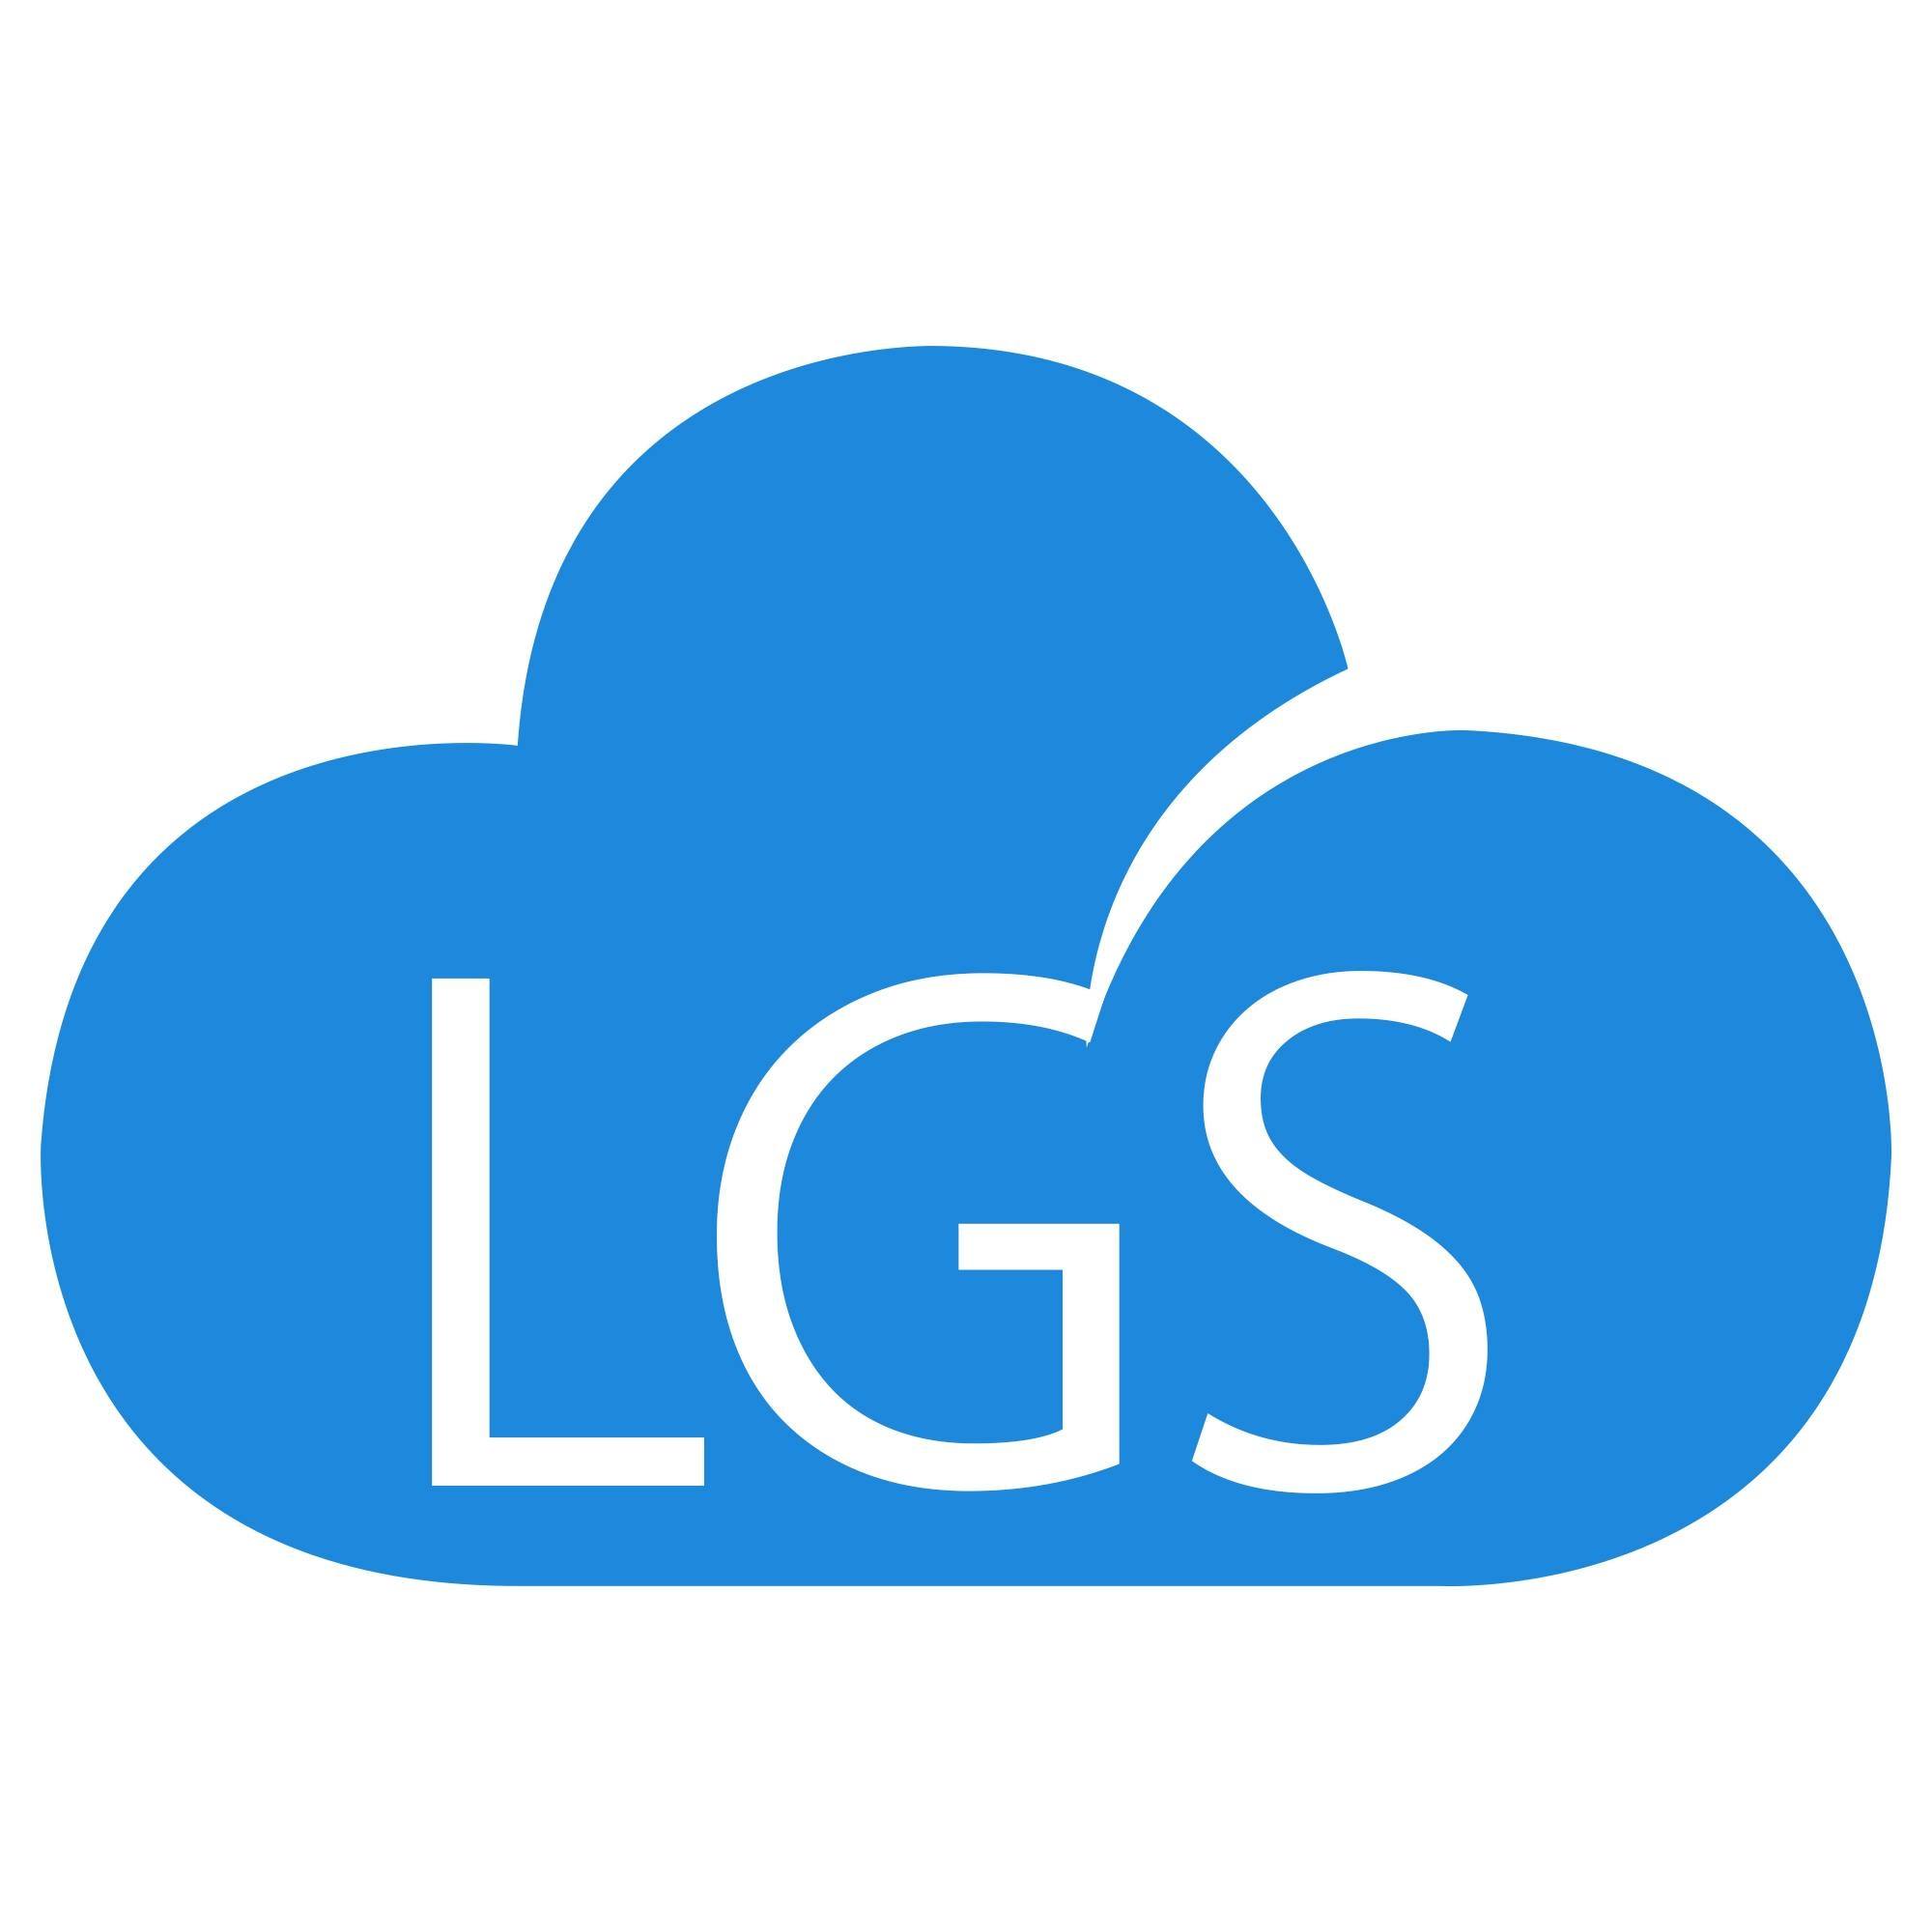 Company logo of Cloud LGS